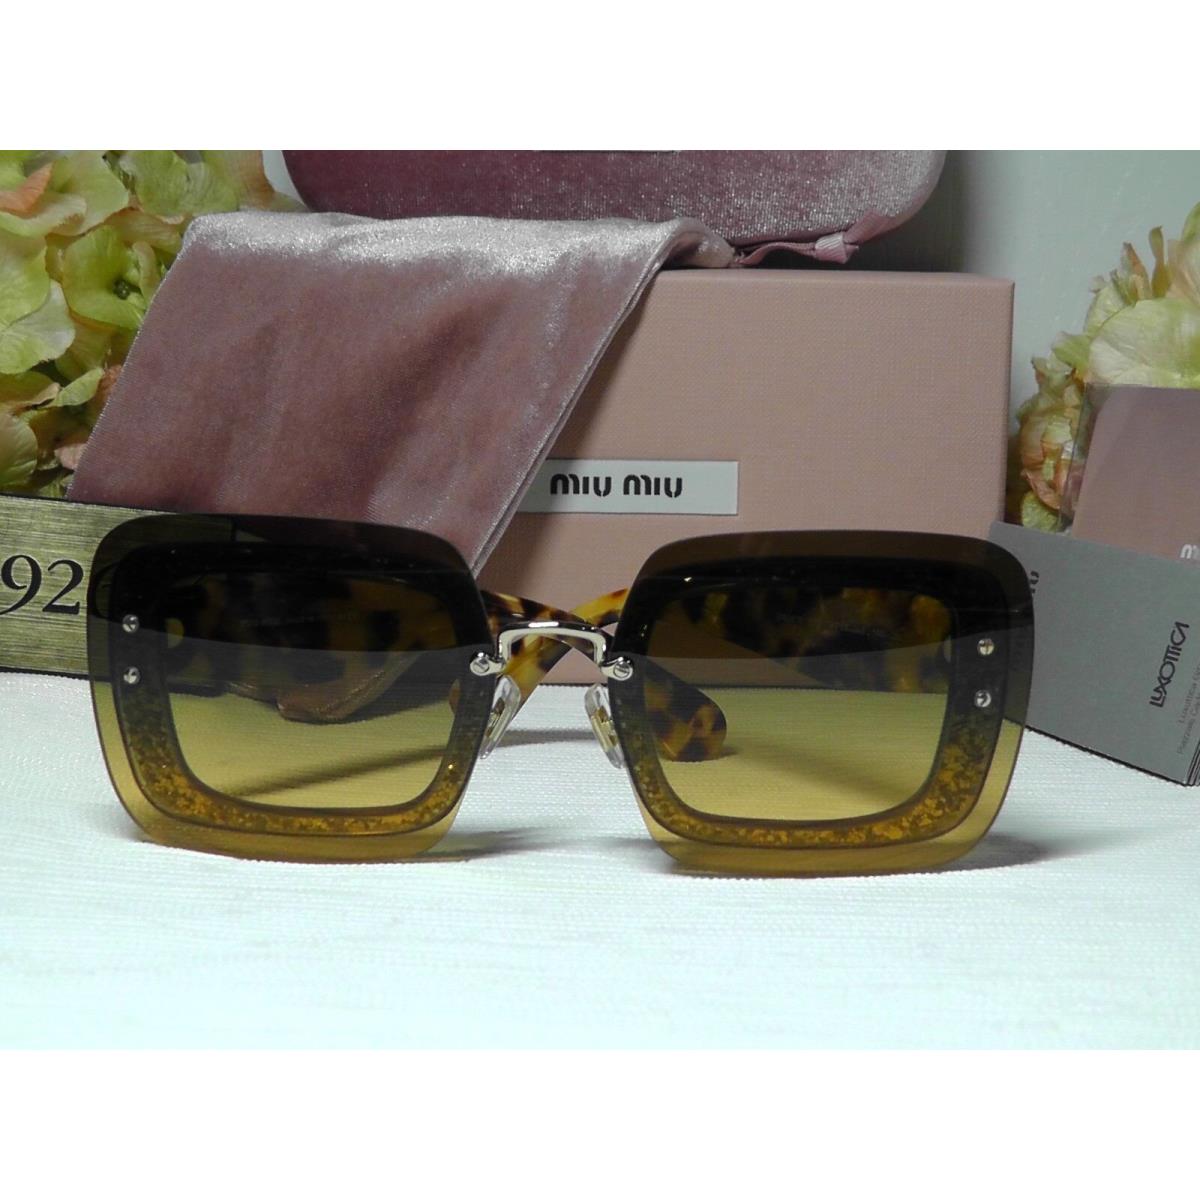 Miu Miu sunglasses  - Light Havana Frame, Gray / Yellow Lens 0